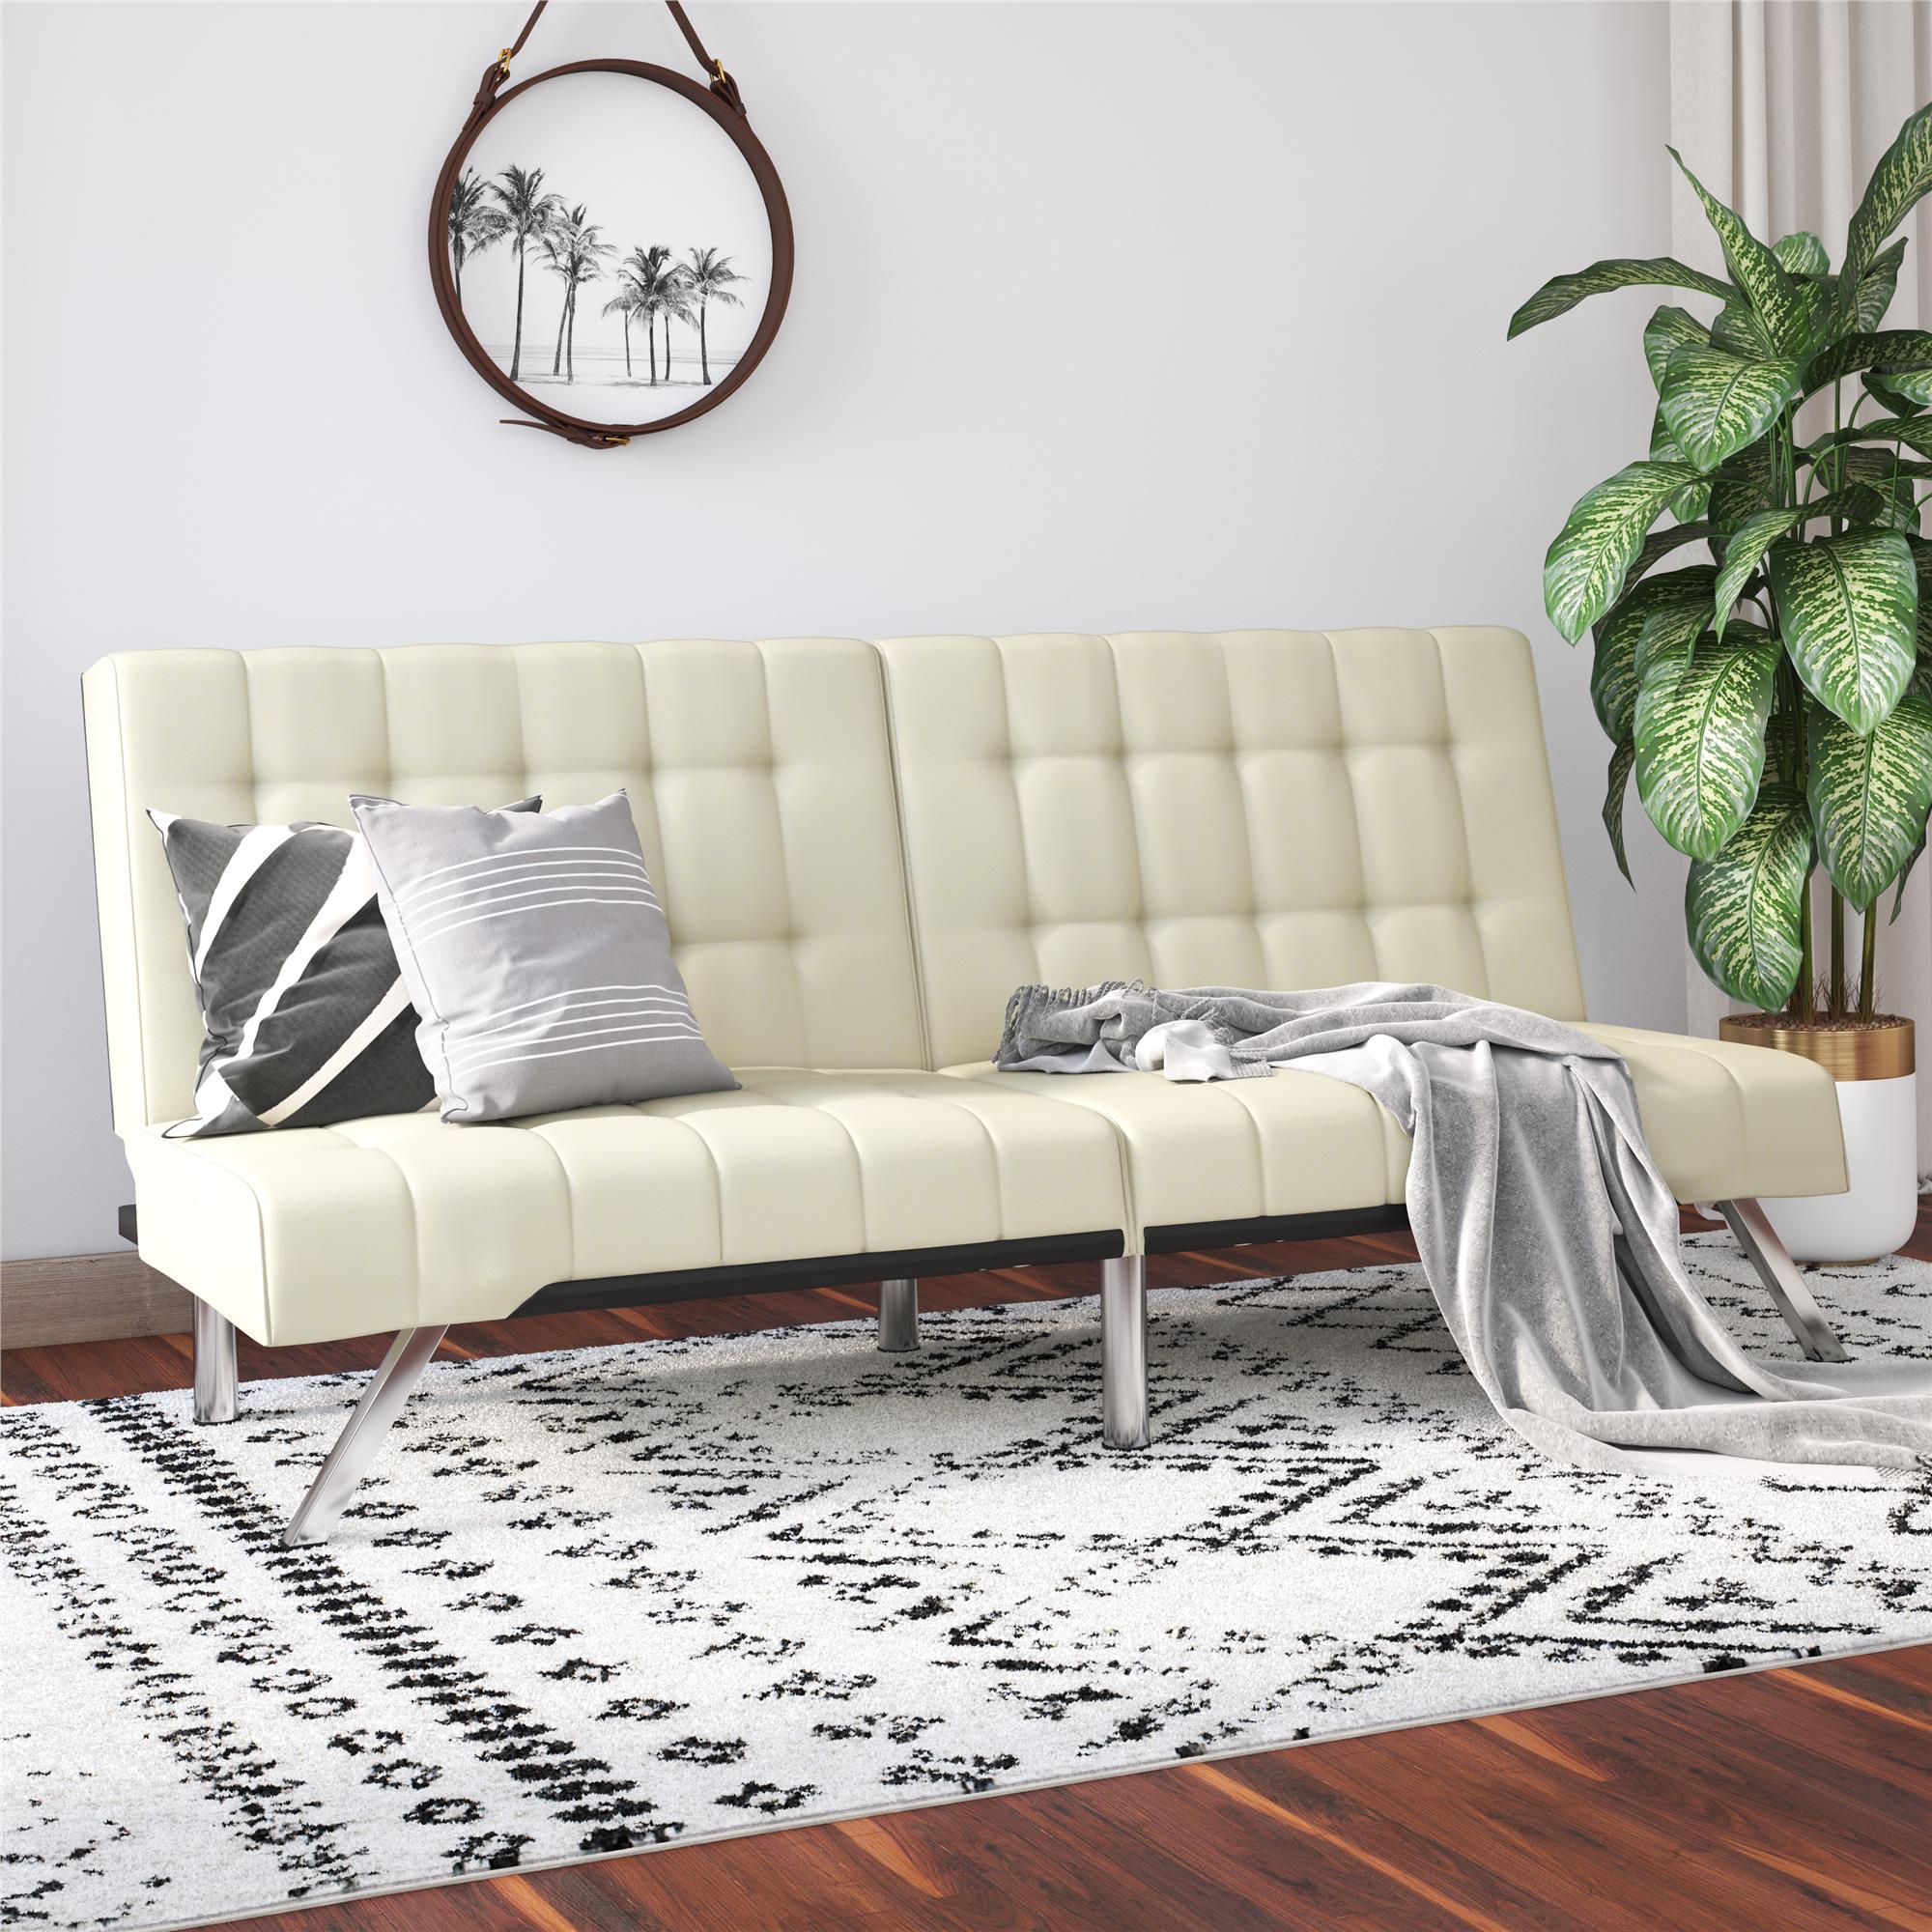 DHP Emily Convertible Tufted Futon Sofa, Vanilla Faux Leather - image 2 of 21